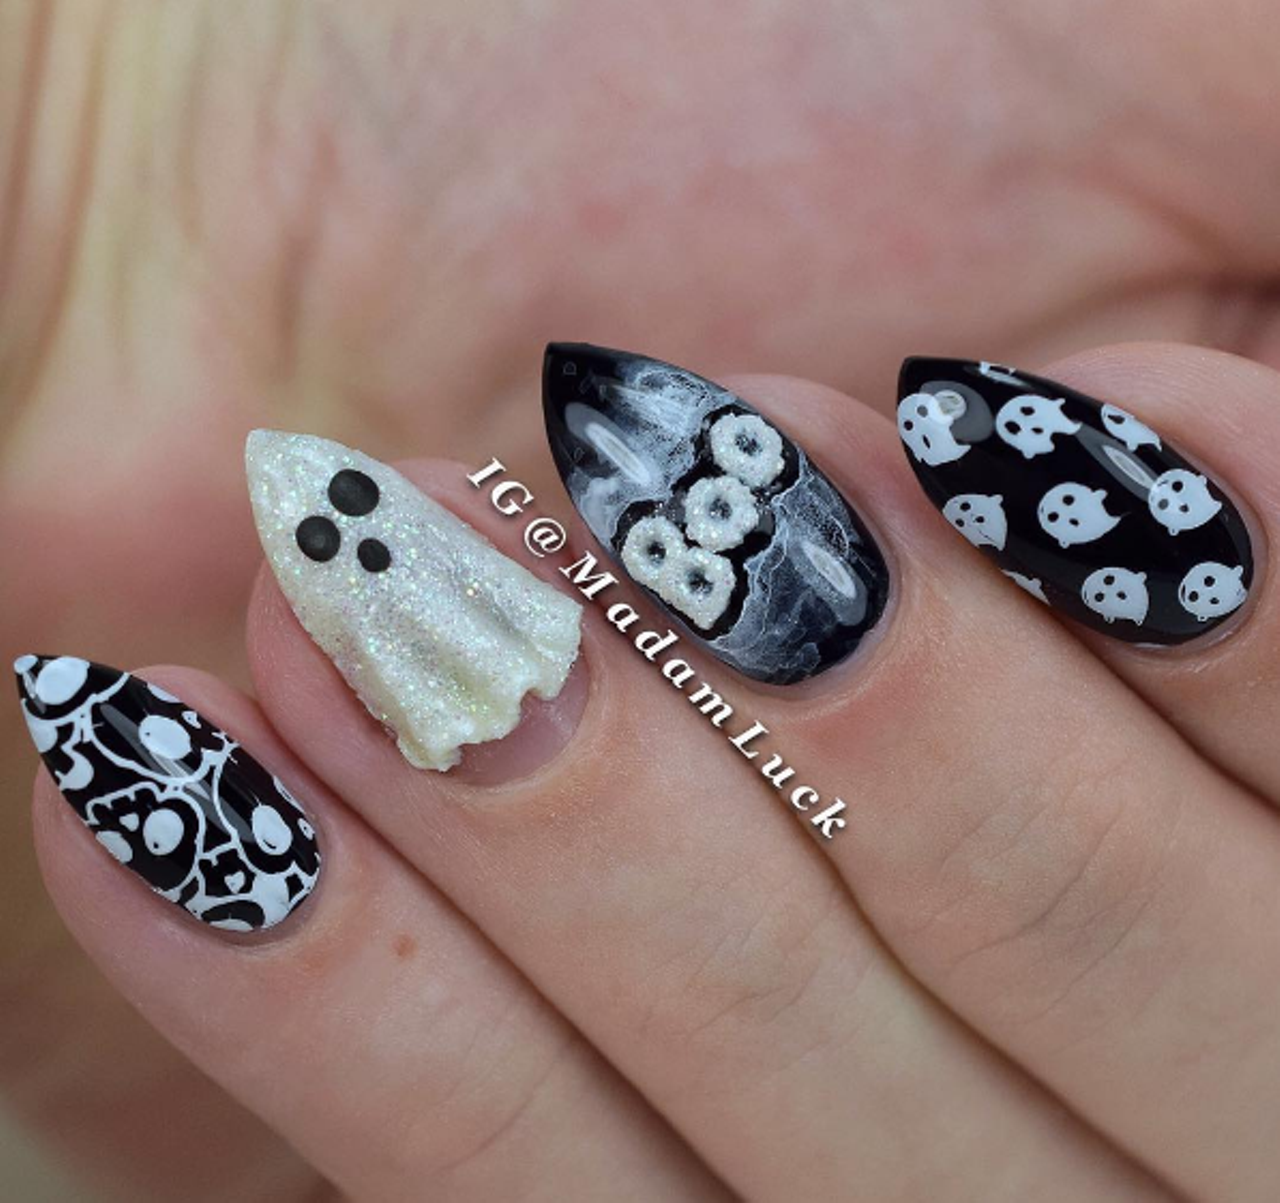 Boo-tastic nails by @madamluck